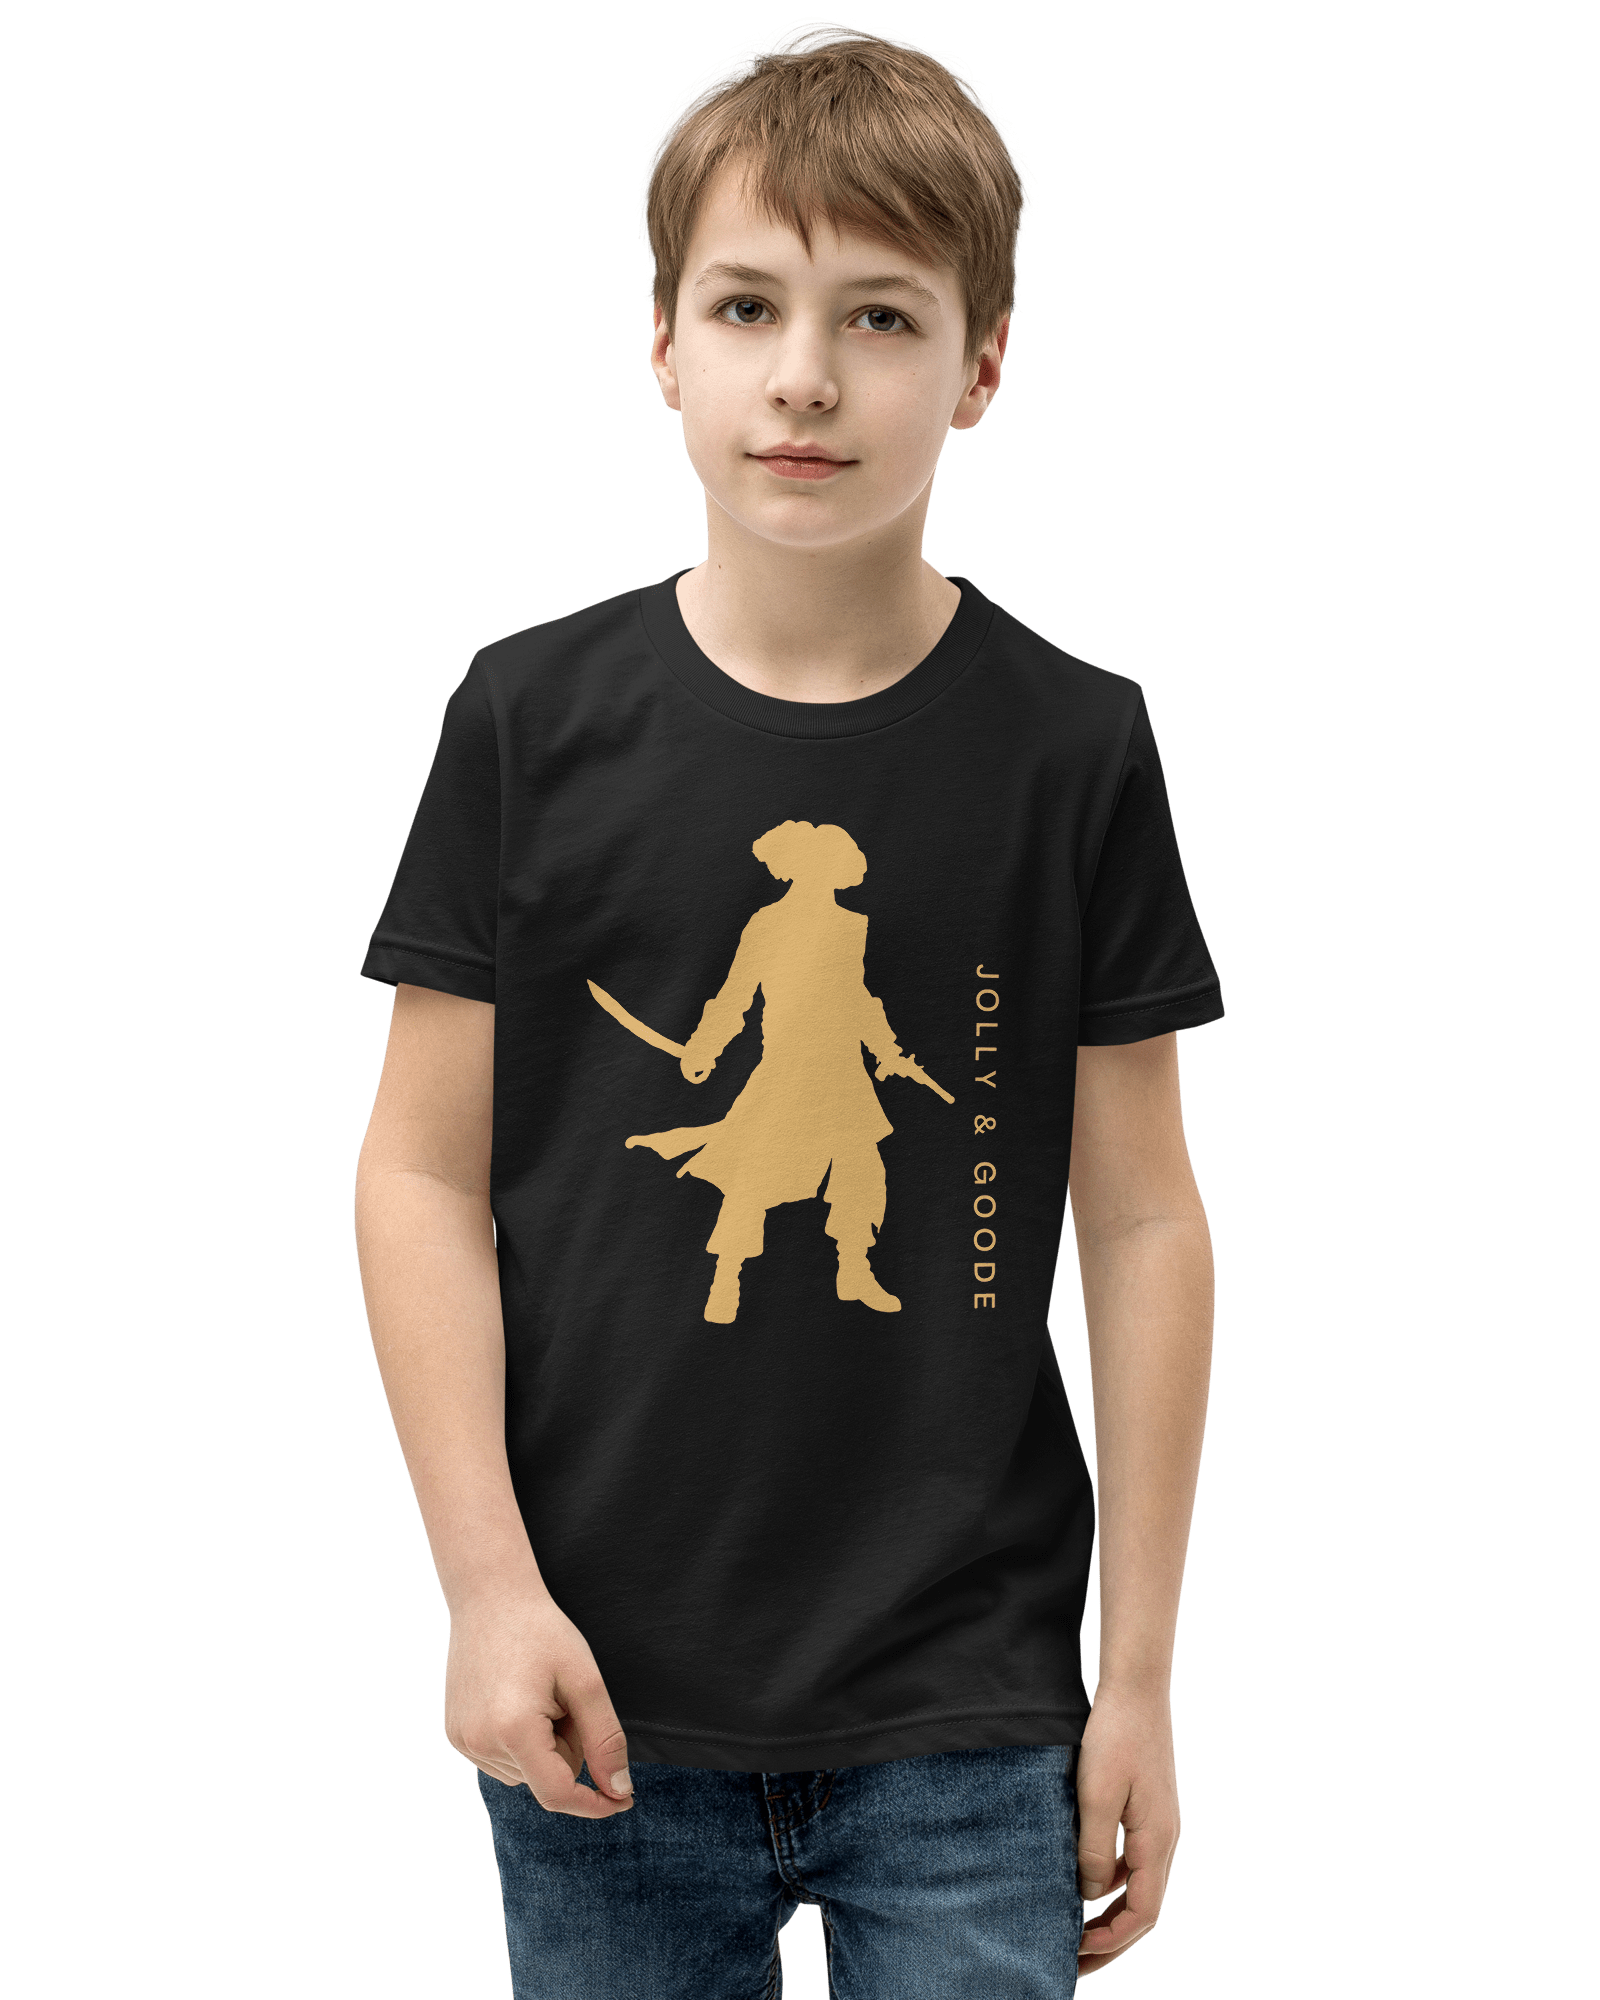 Jolly & Goode Pirate Silhouette Kids T-Shirt Black / S kids t-shirts Jolly & Goode